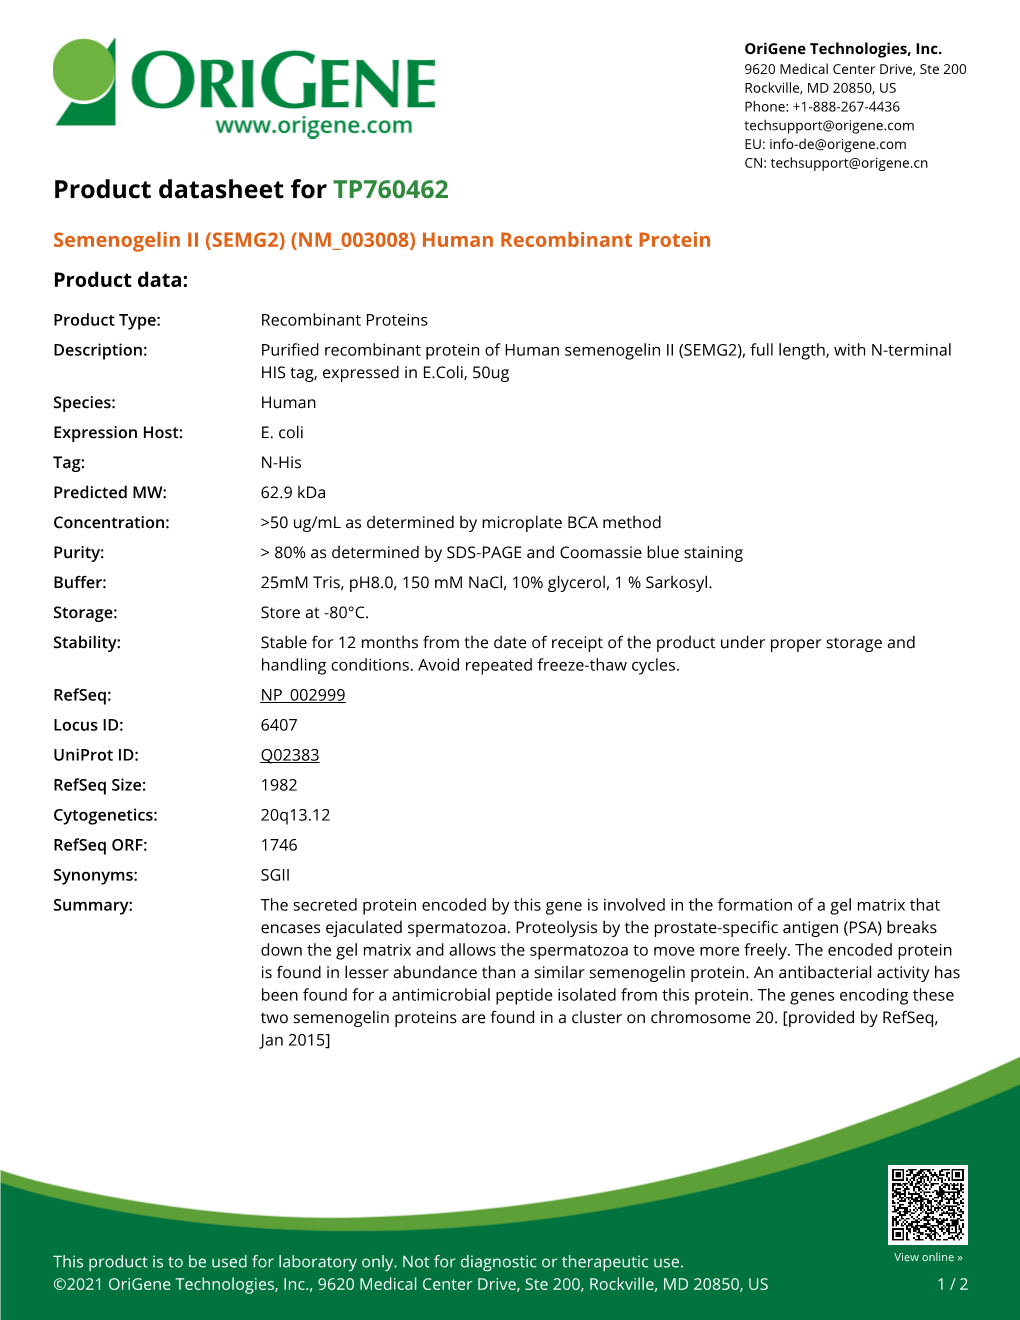 Semenogelin II (SEMG2) (NM 003008) Human Recombinant Protein Product Data